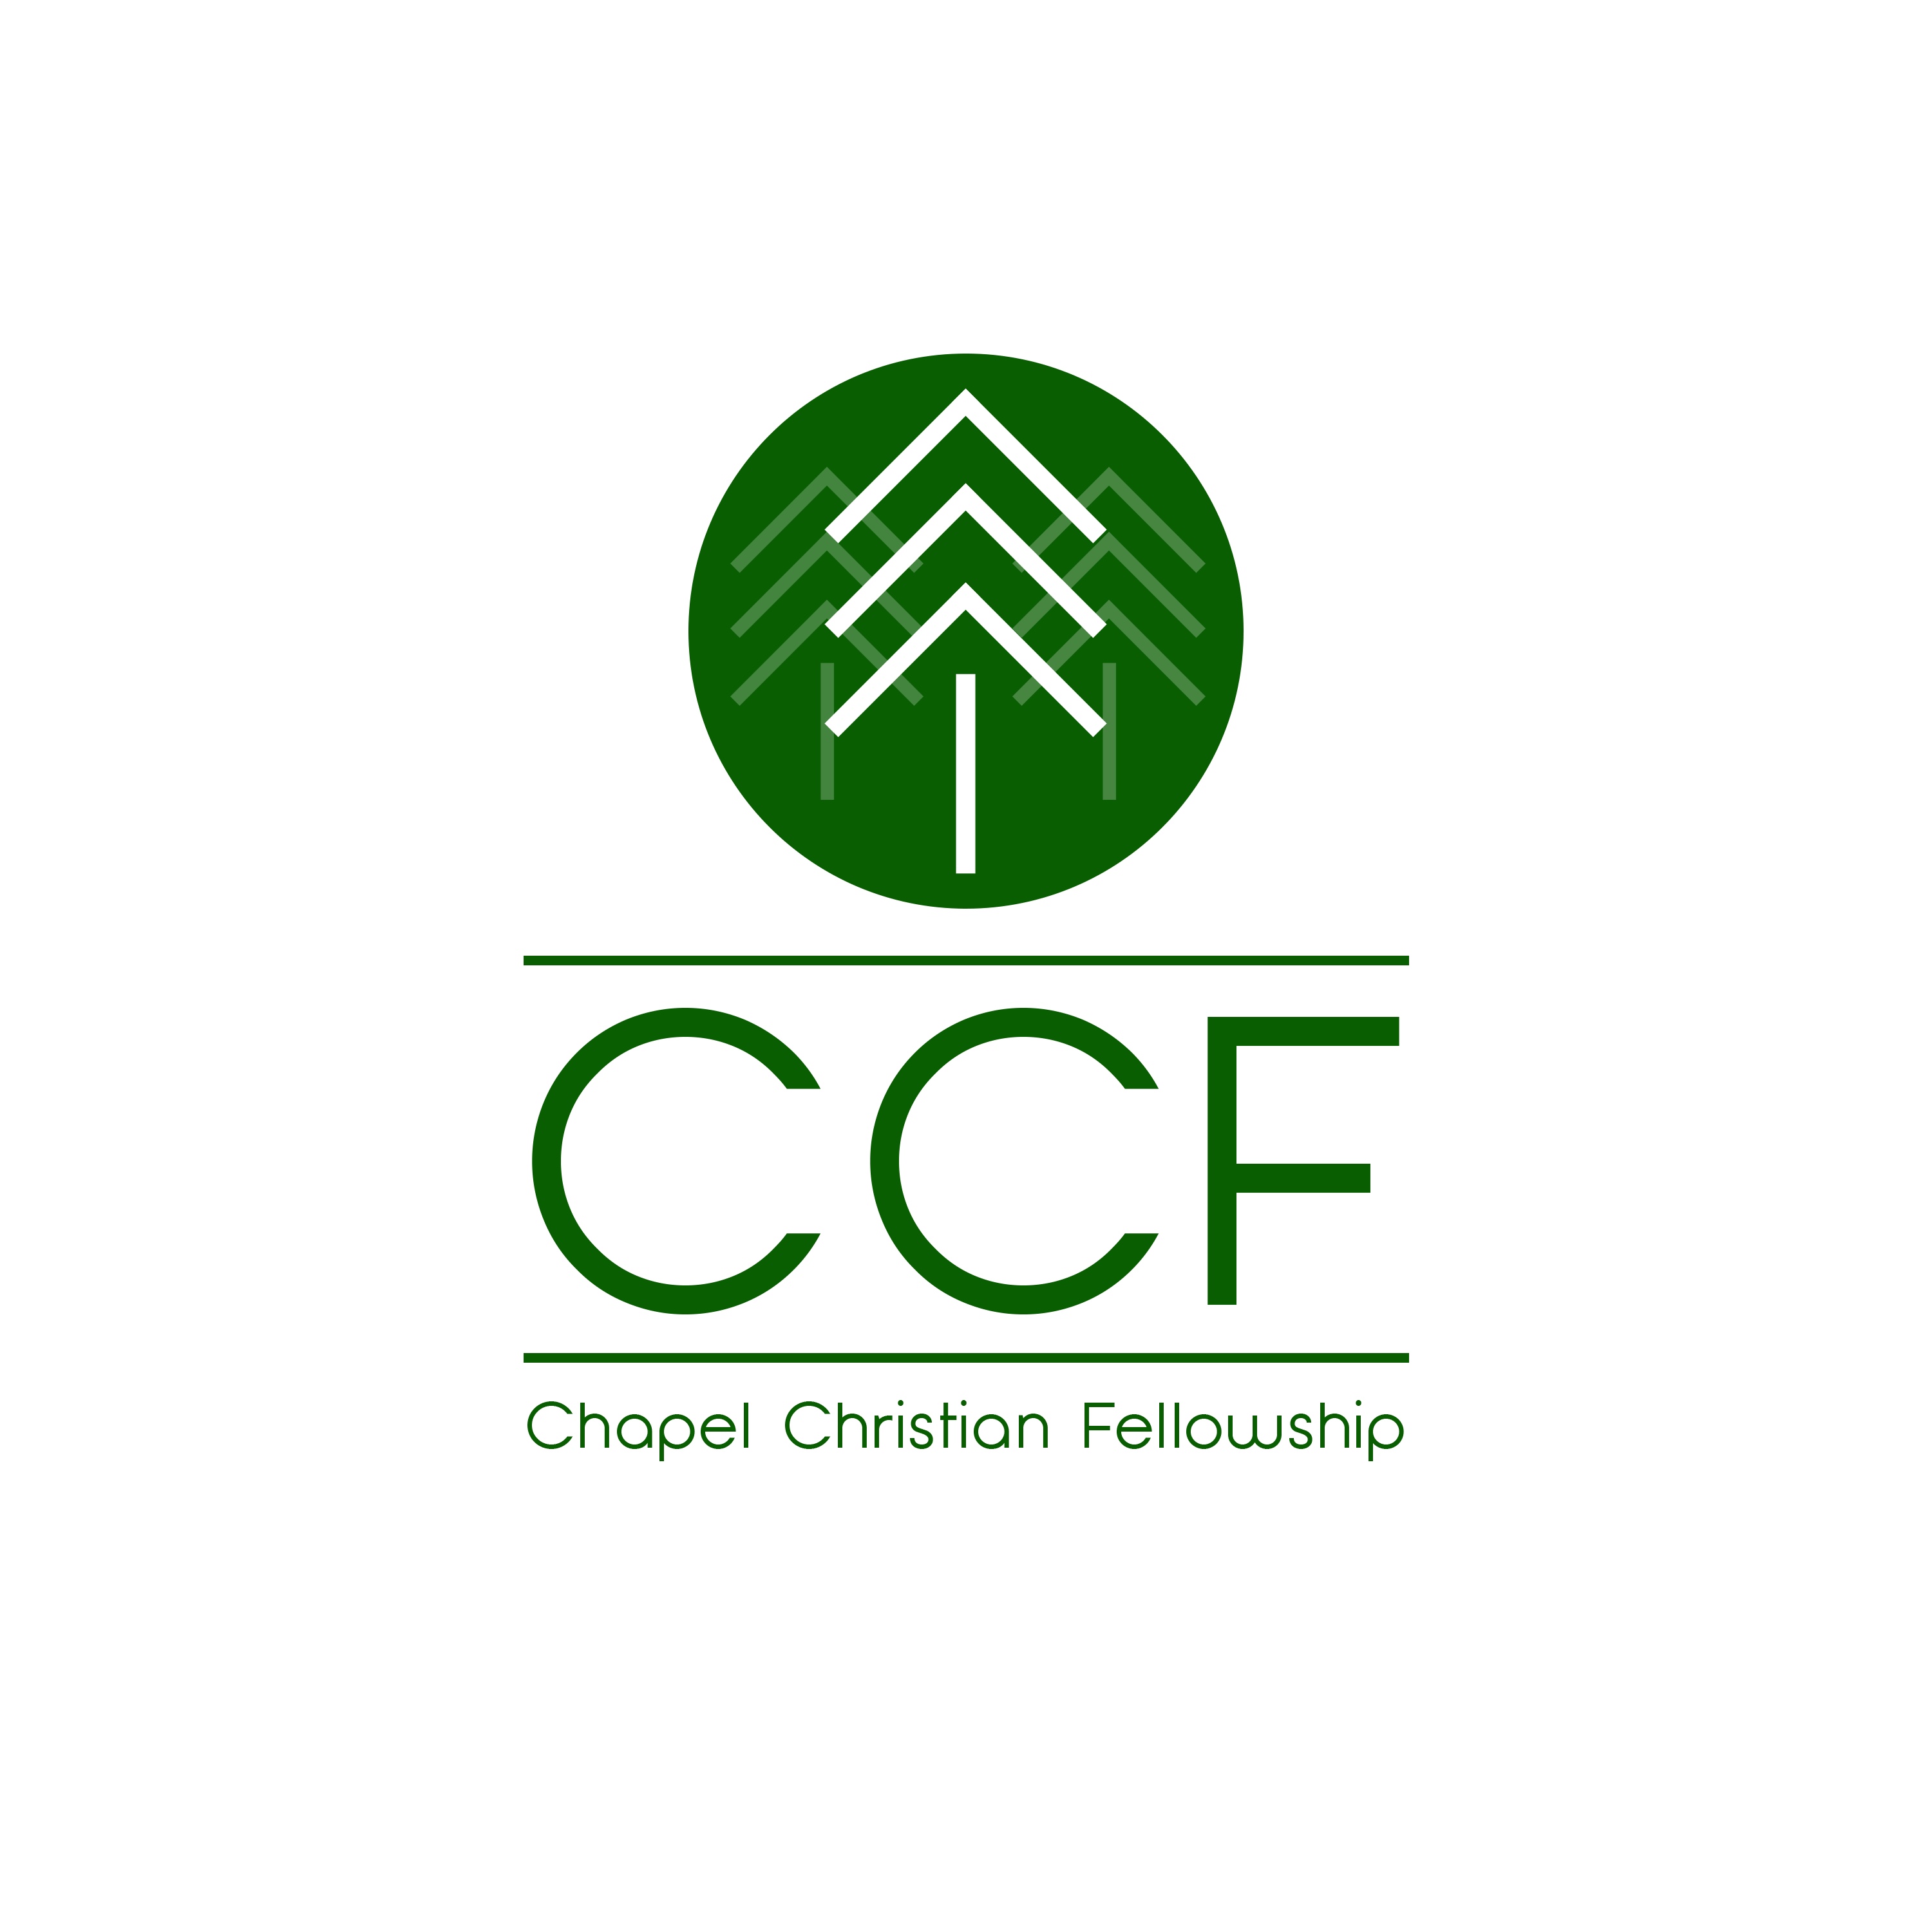 Chapel Christian Fellowship logo